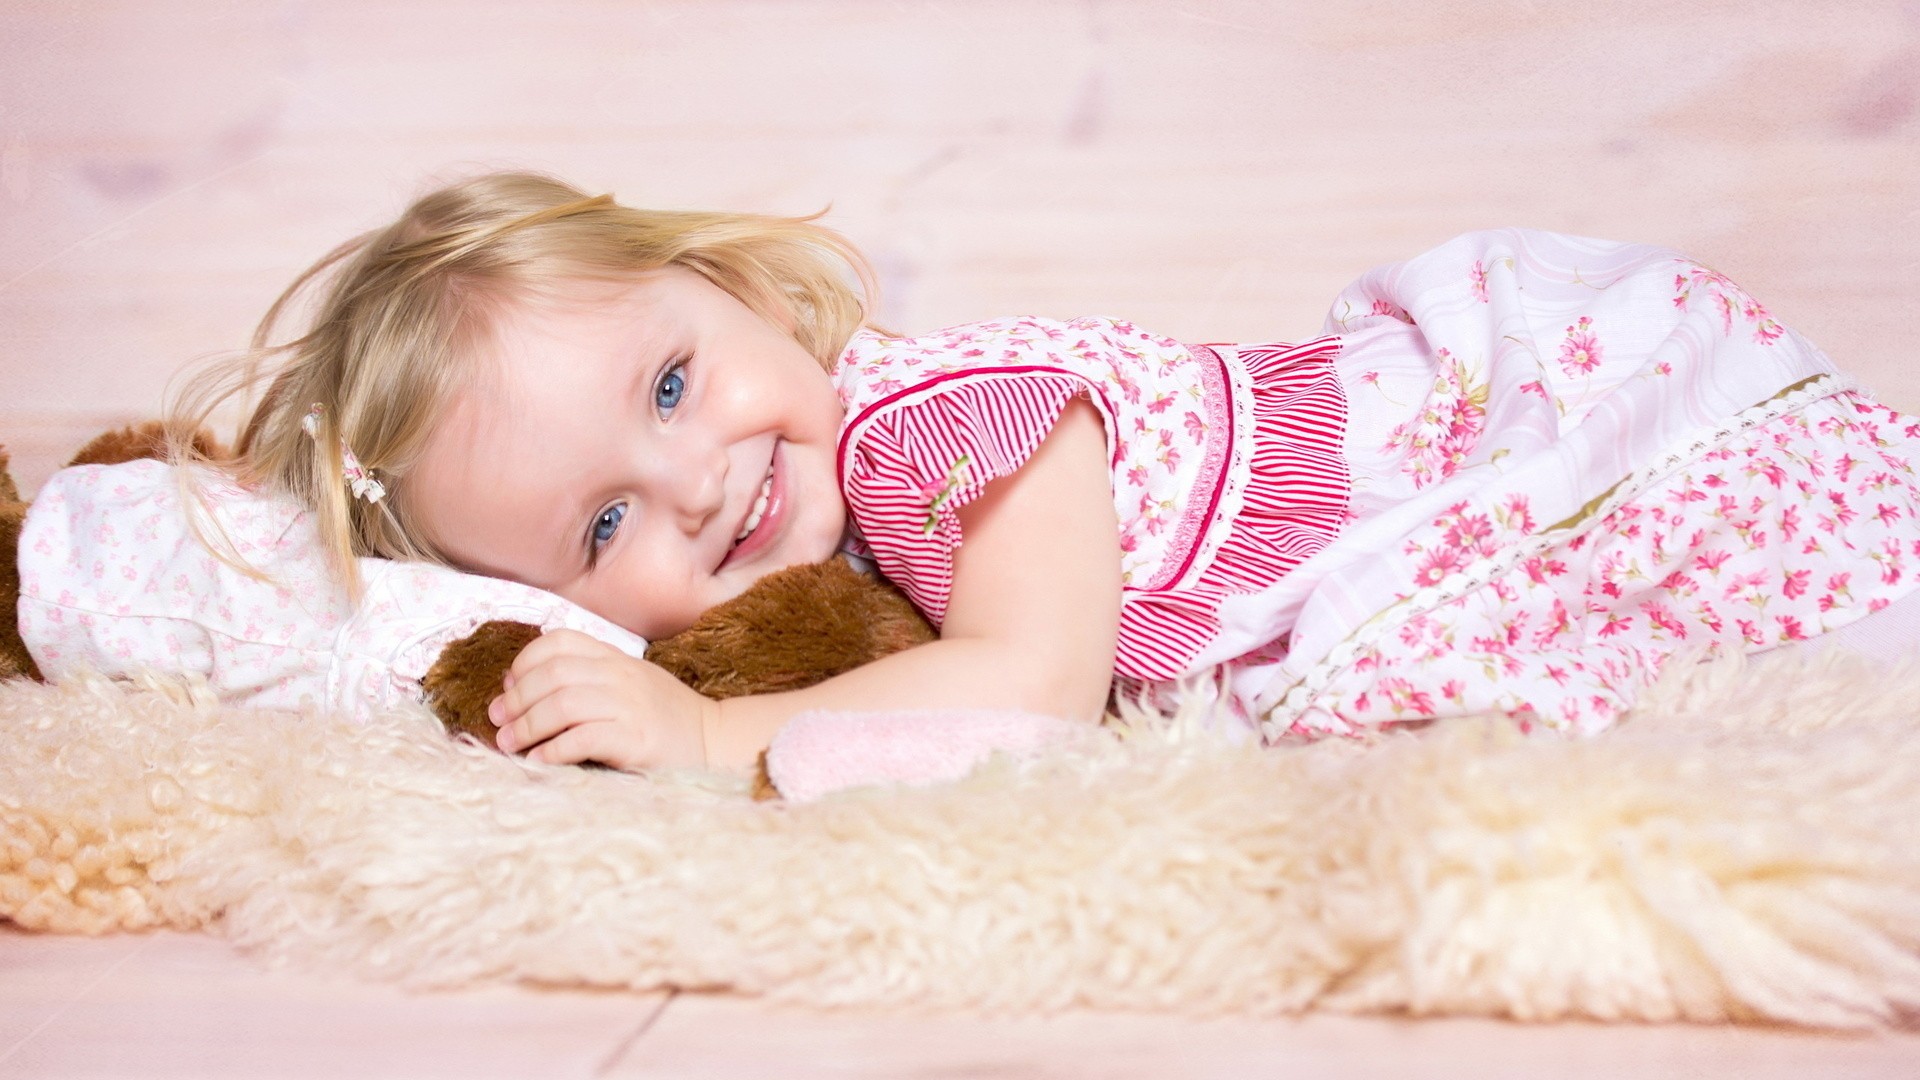 children blue eyes smiling blonde Wallpaper